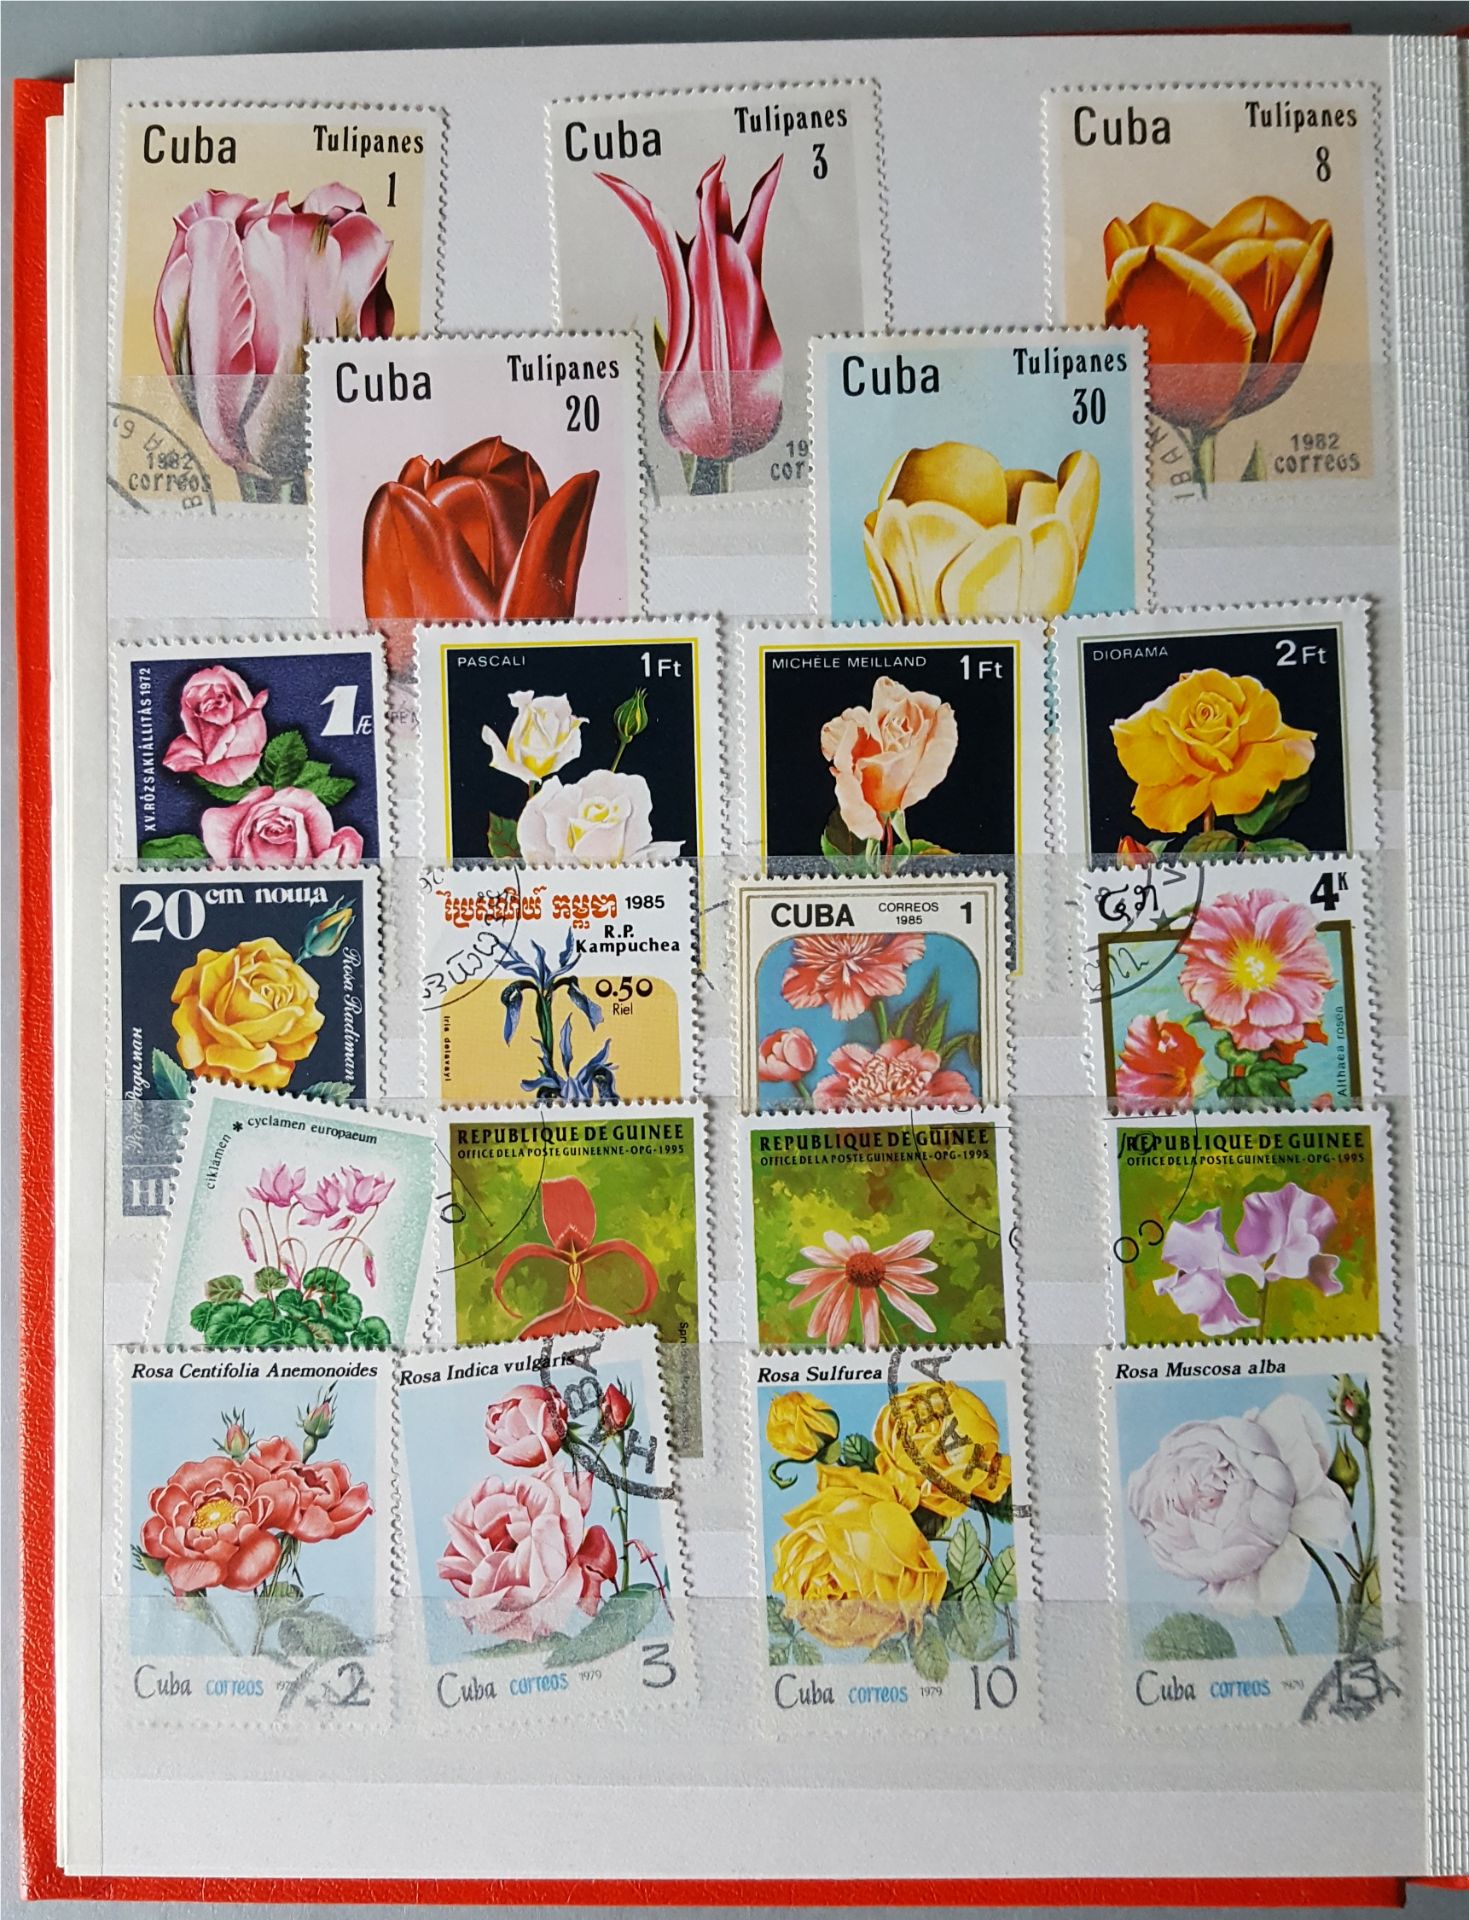 Vintage Retro Stamp Album 300 Plus Stamps Mixed Themes - Image 3 of 5